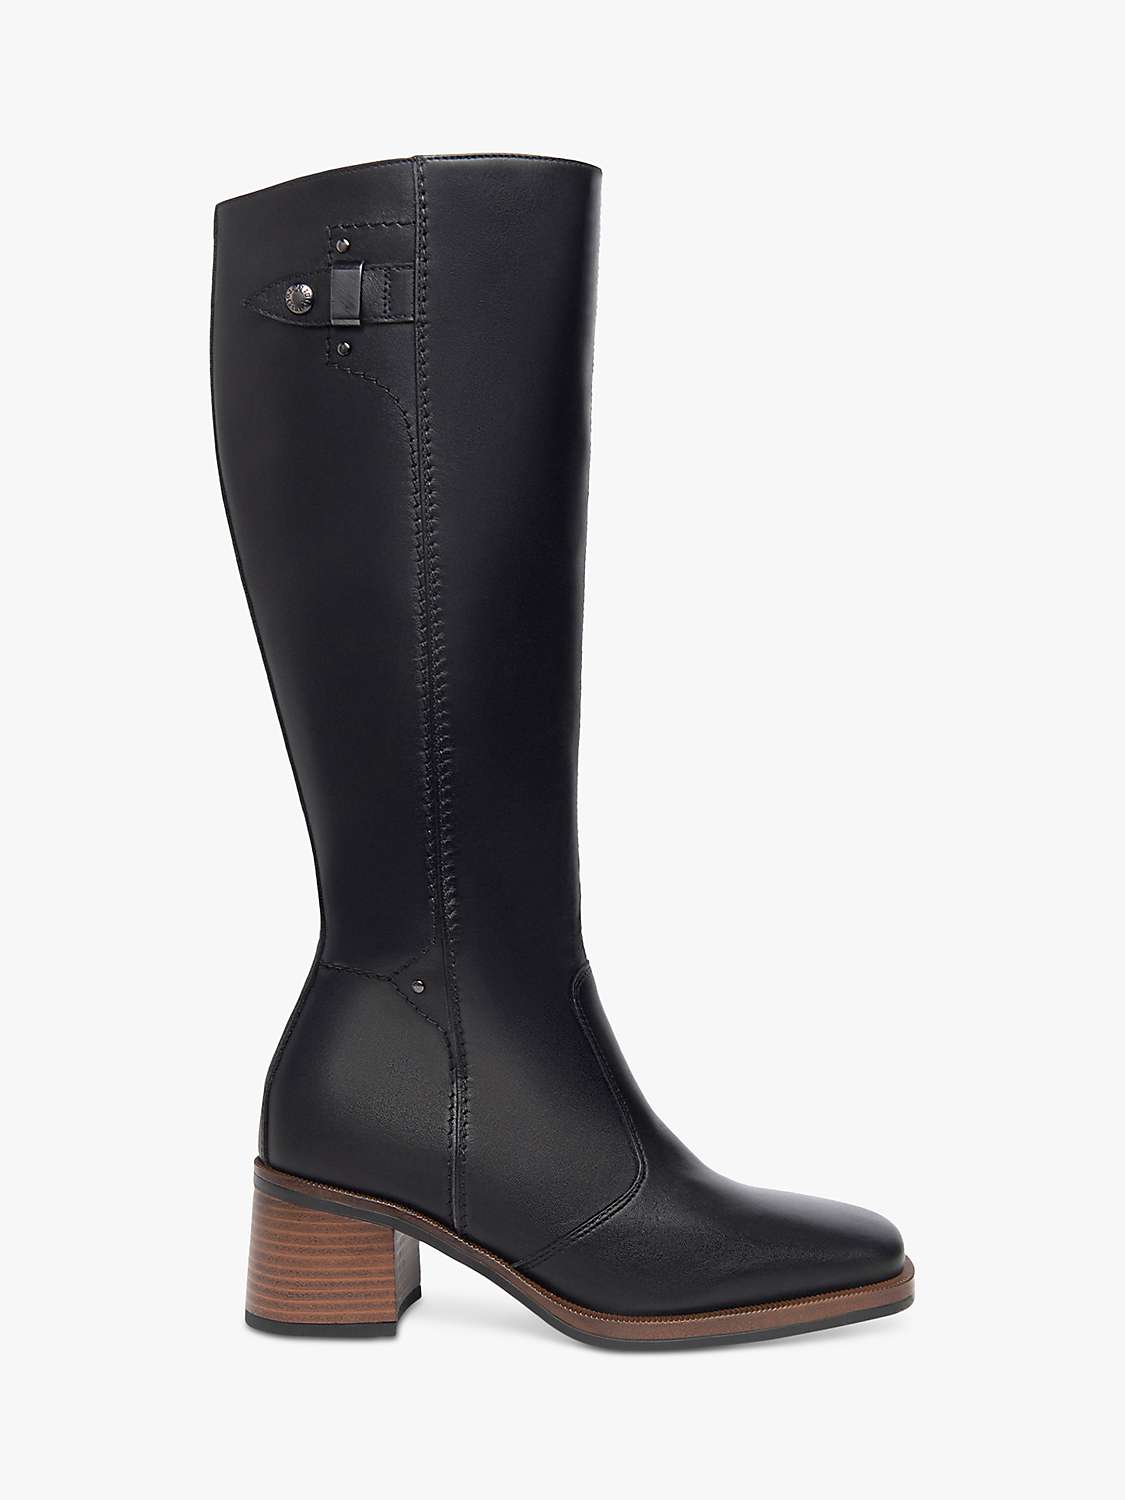 Buy NeroGiardini Square Toe Block Heel Knee High Leather Boots, Black Online at johnlewis.com